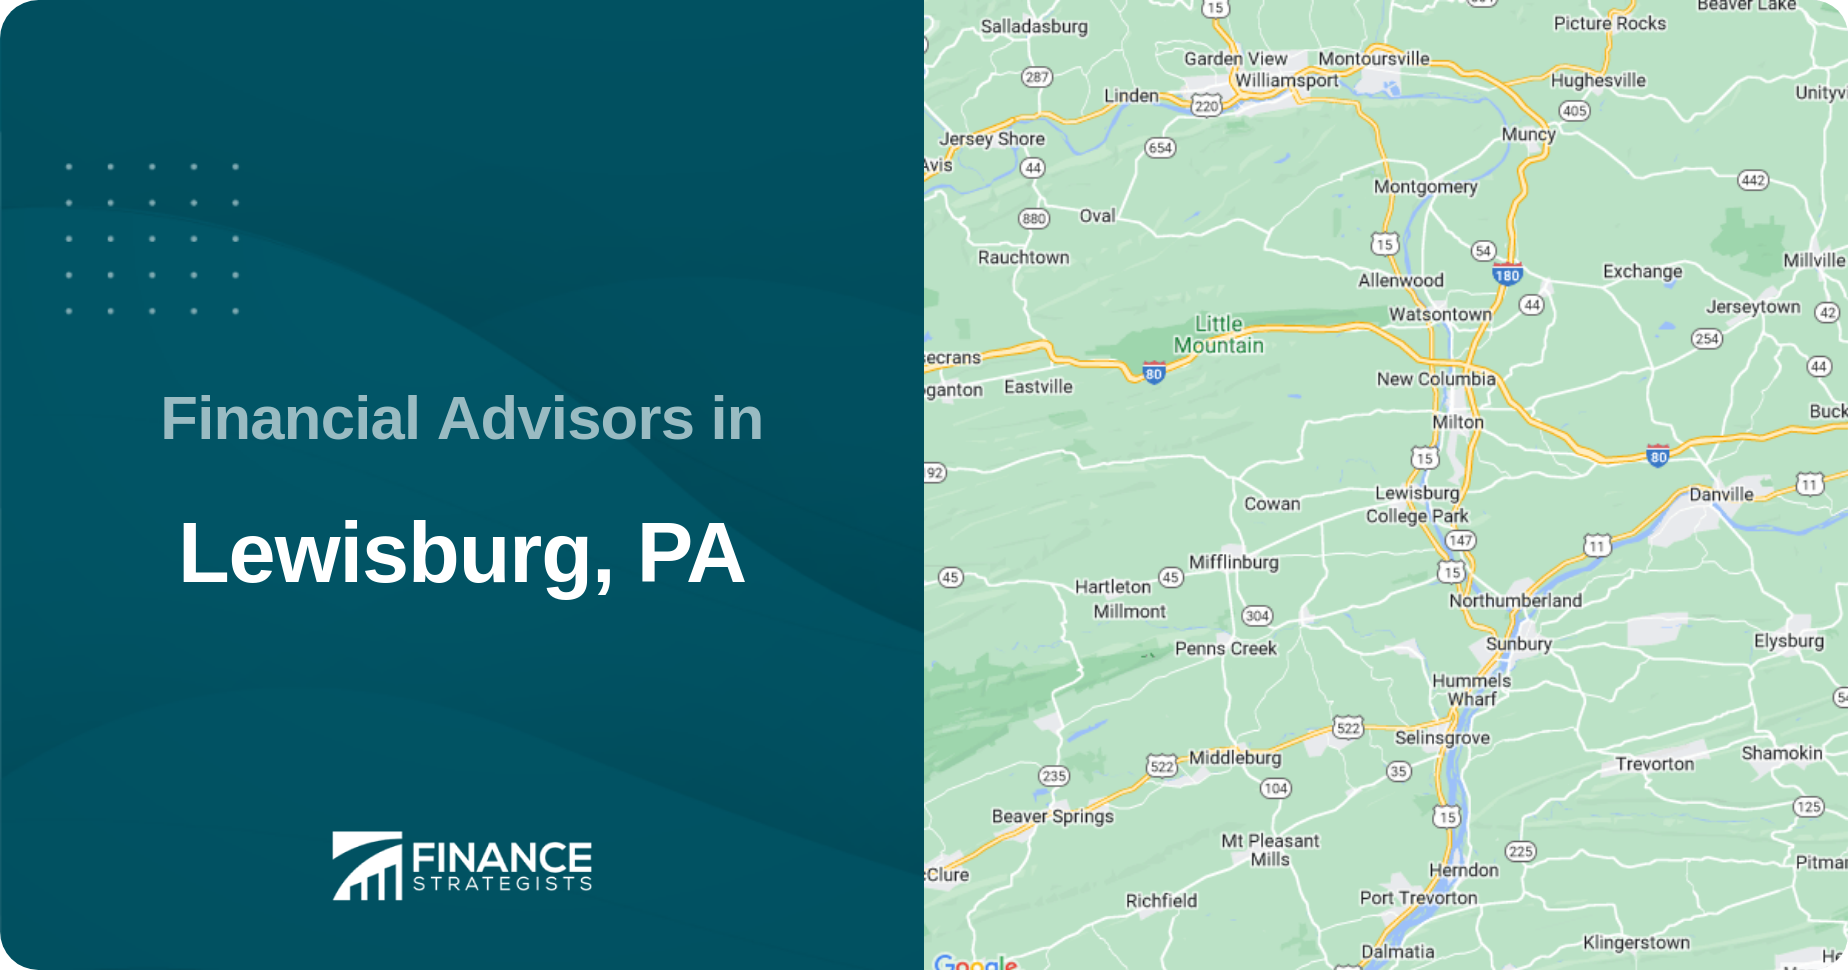 Financial Advisors in Lewisburg, PA